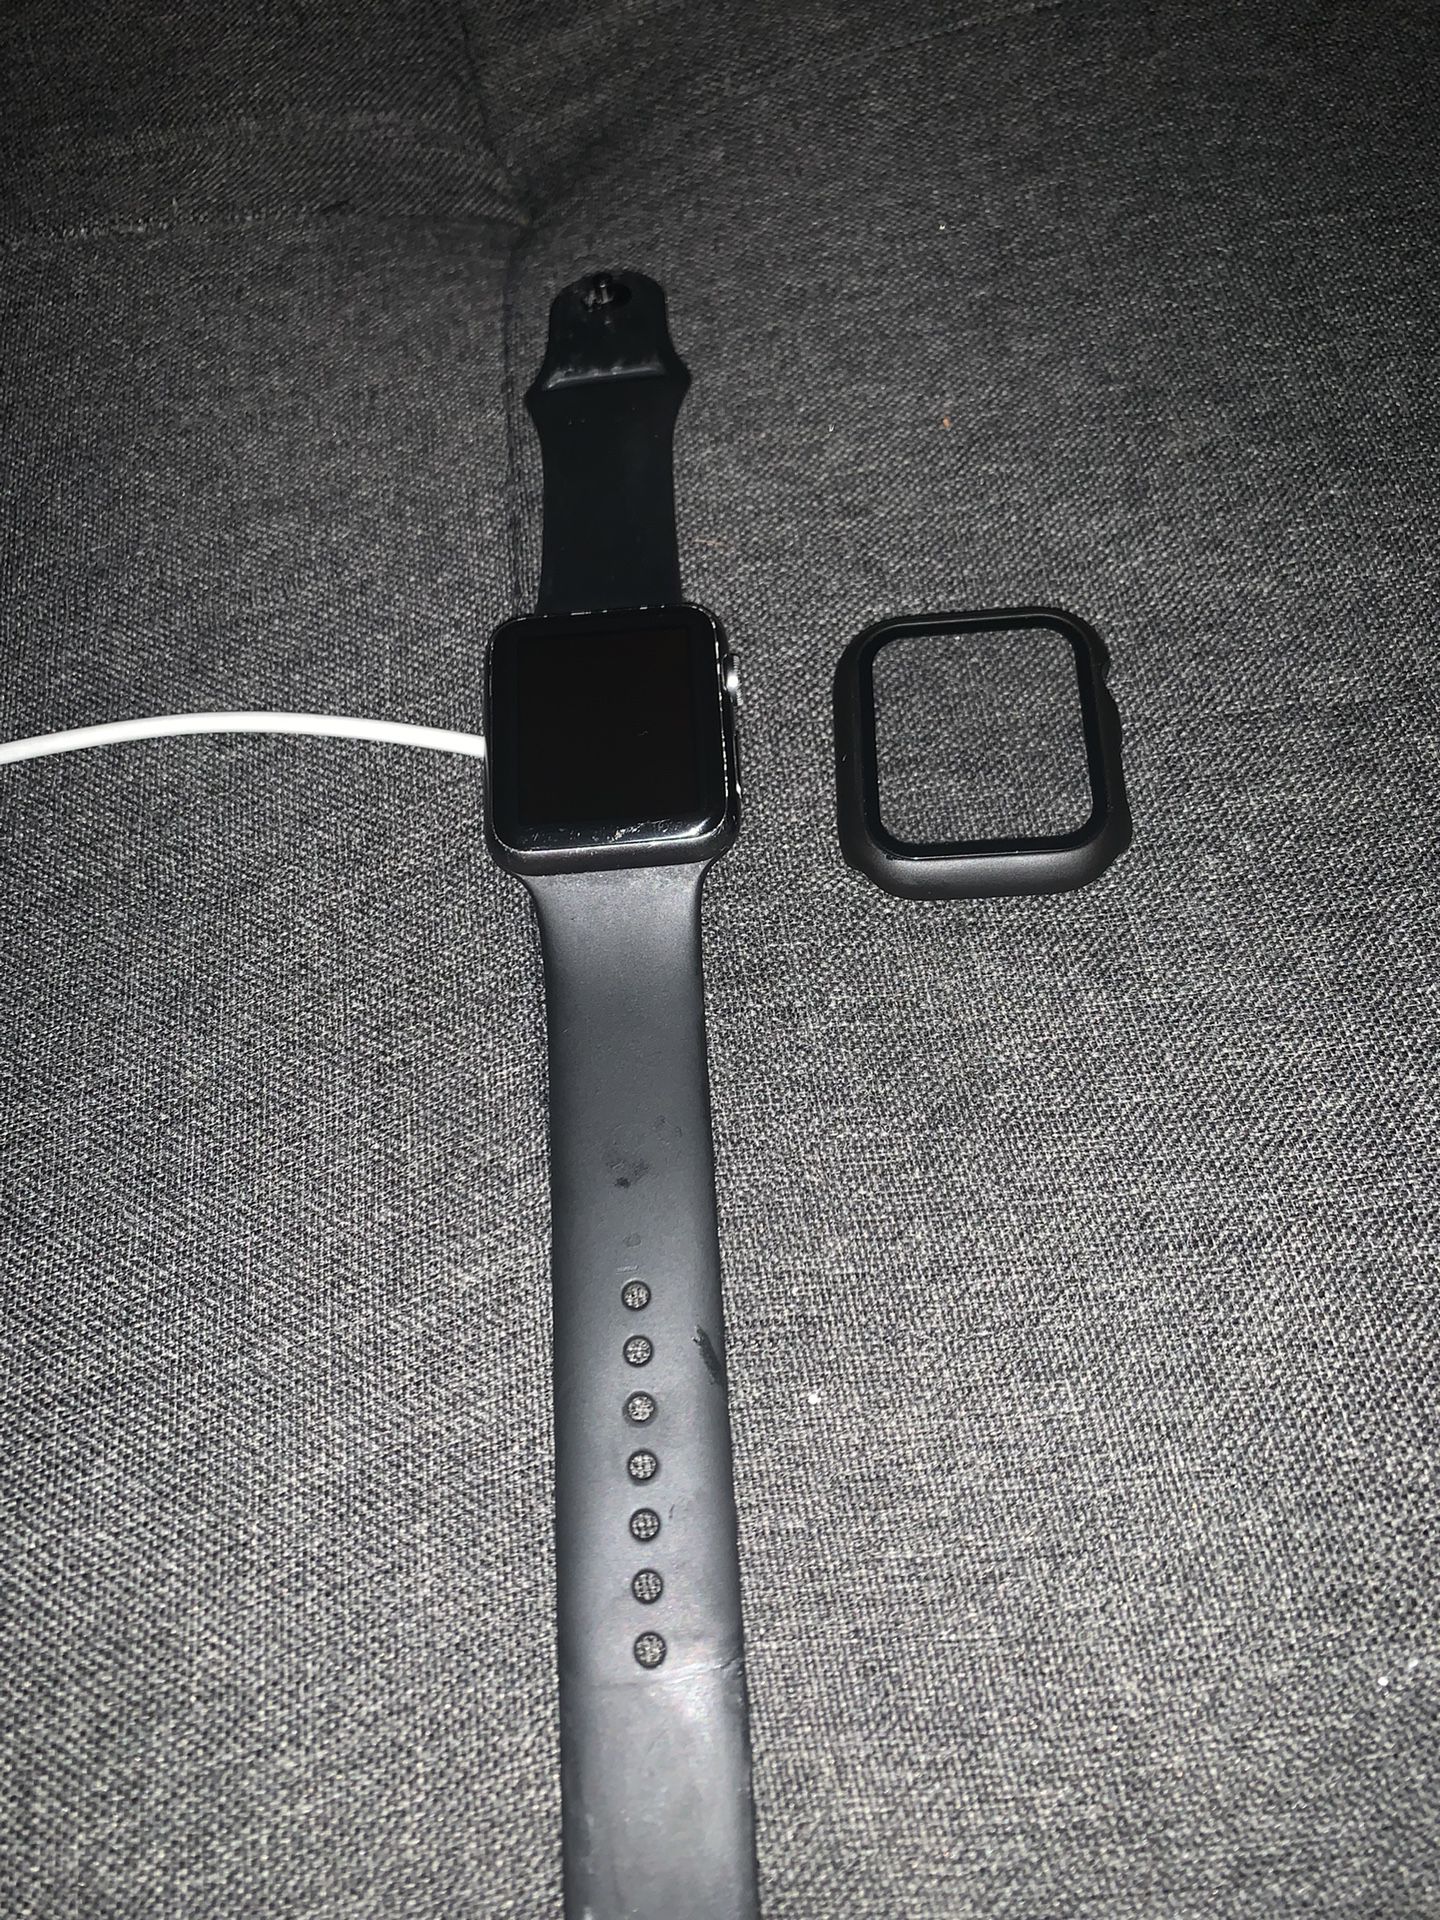 I’m Apple Watche